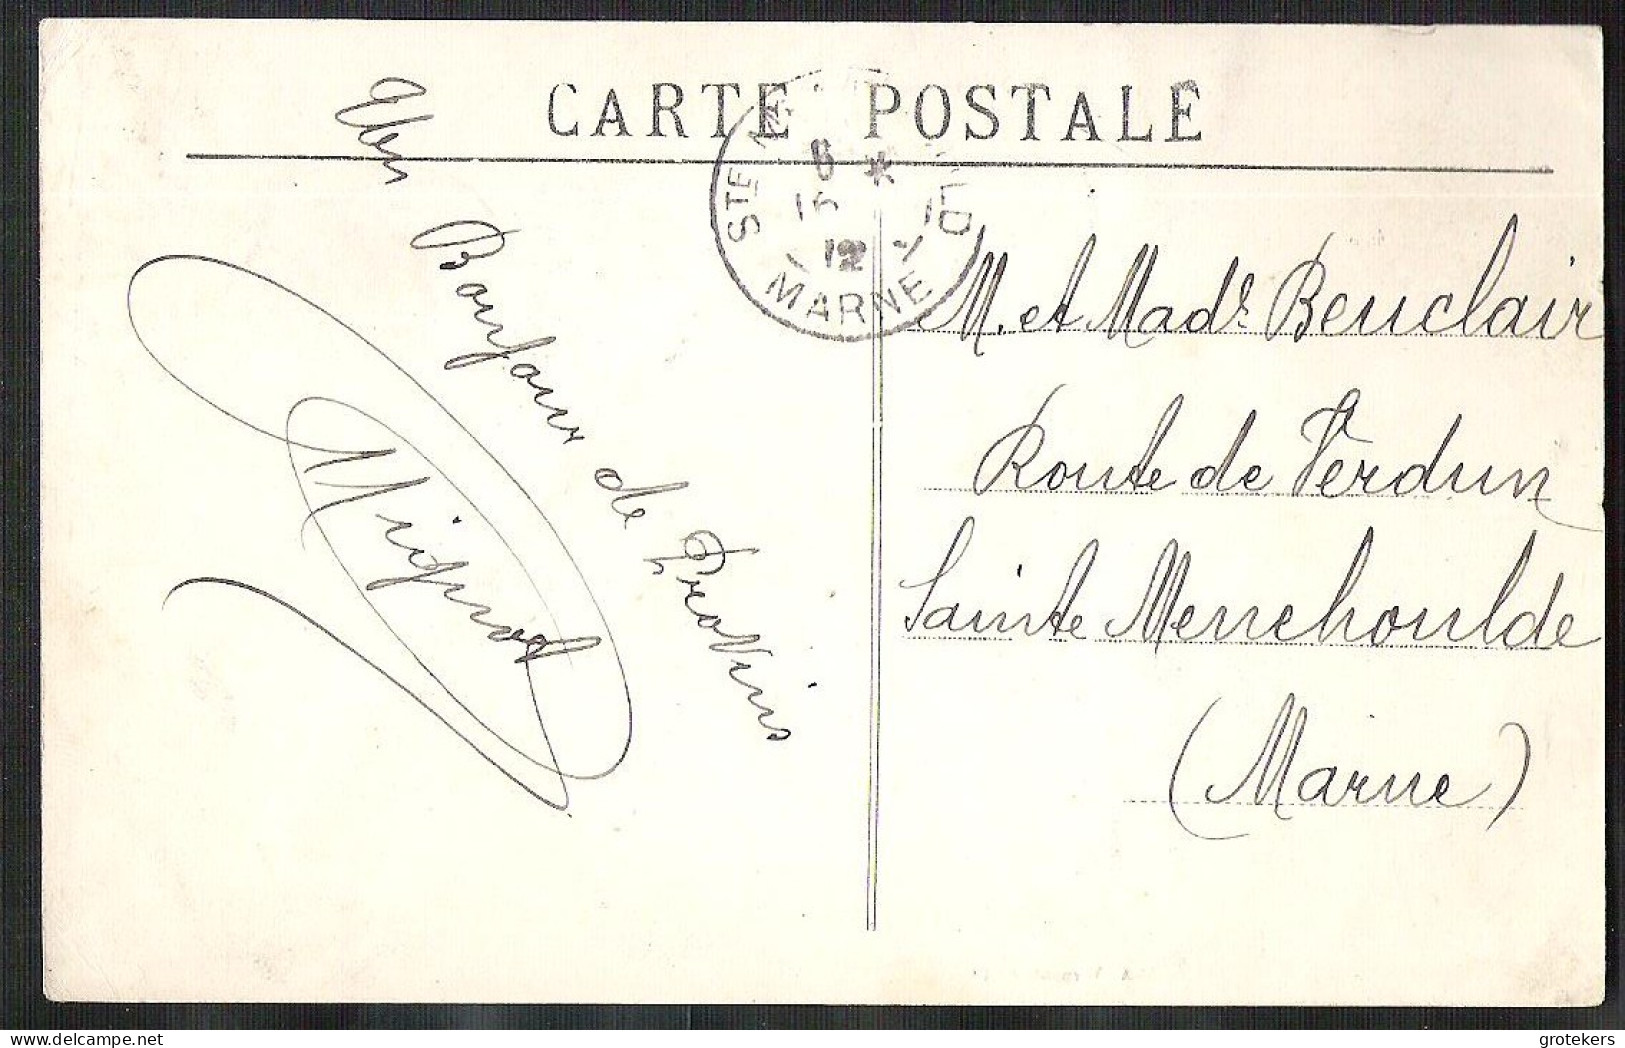 PROVINS La Villa Garnier 1912 To Sainte Menehould (Marne) - Provins